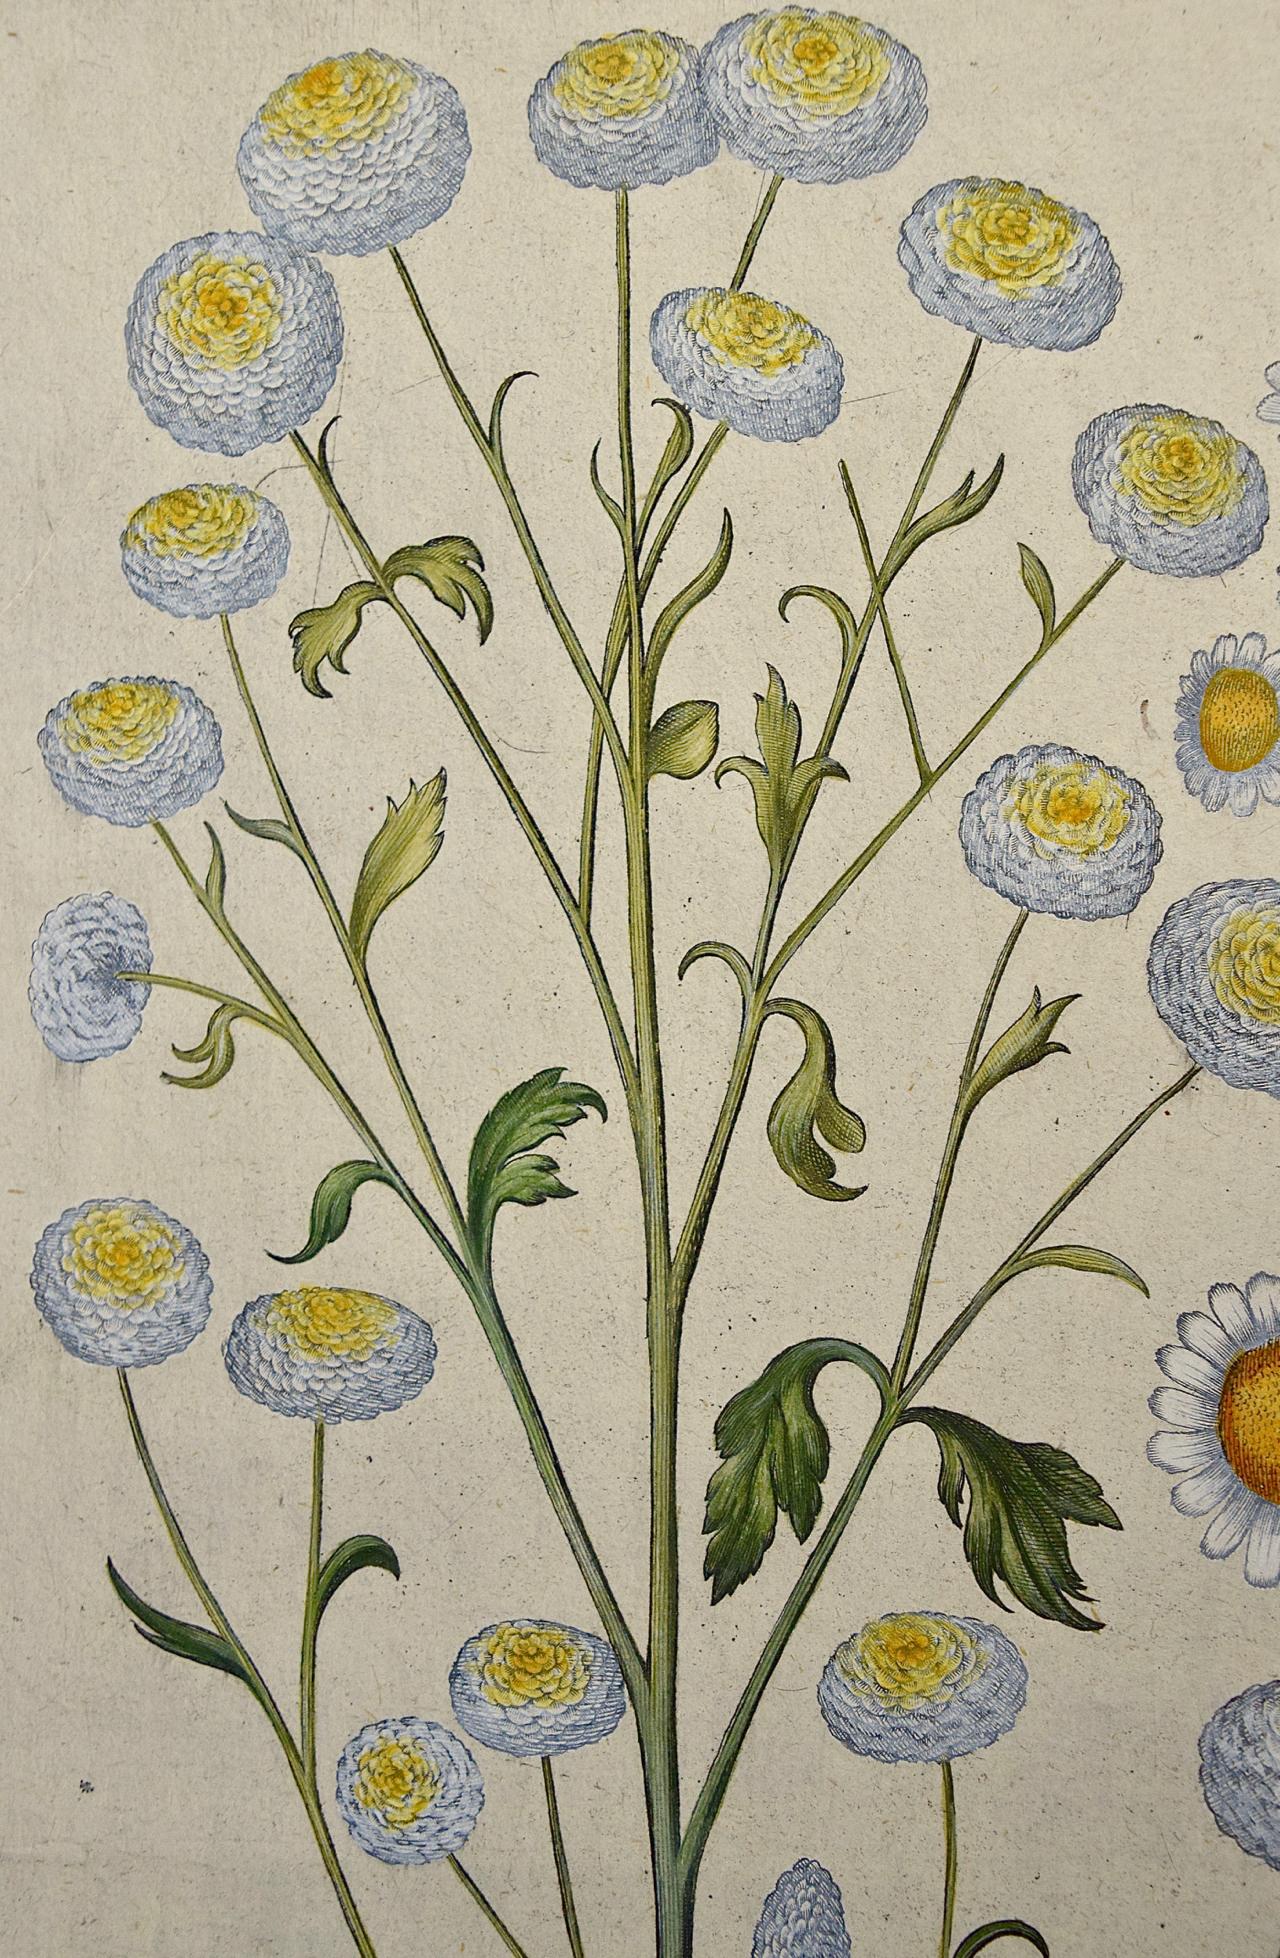 Flowering Feverfew Plants: A 17th C. Besler Hand-colored Botanical Engraving  - Academic Print by Basilius Besler